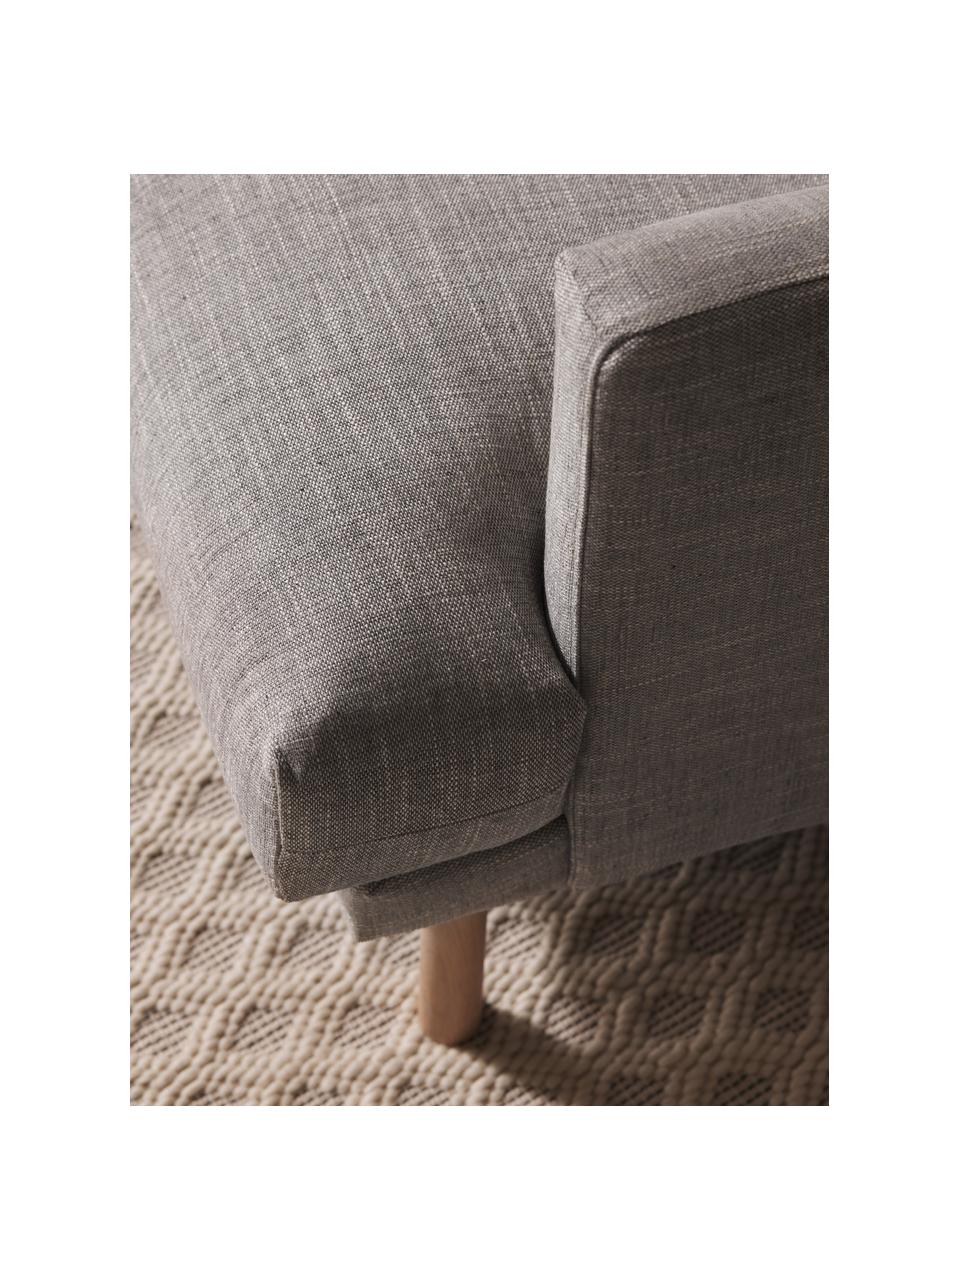 Sofa fauteuil Adrian, Bekleding: 47% viscose, 23% katoen, , Frame: multiplex, Poten: eikenhout, geolied Dit pr, Geweven stof lichtgrijs, B 90 x D 95 cm